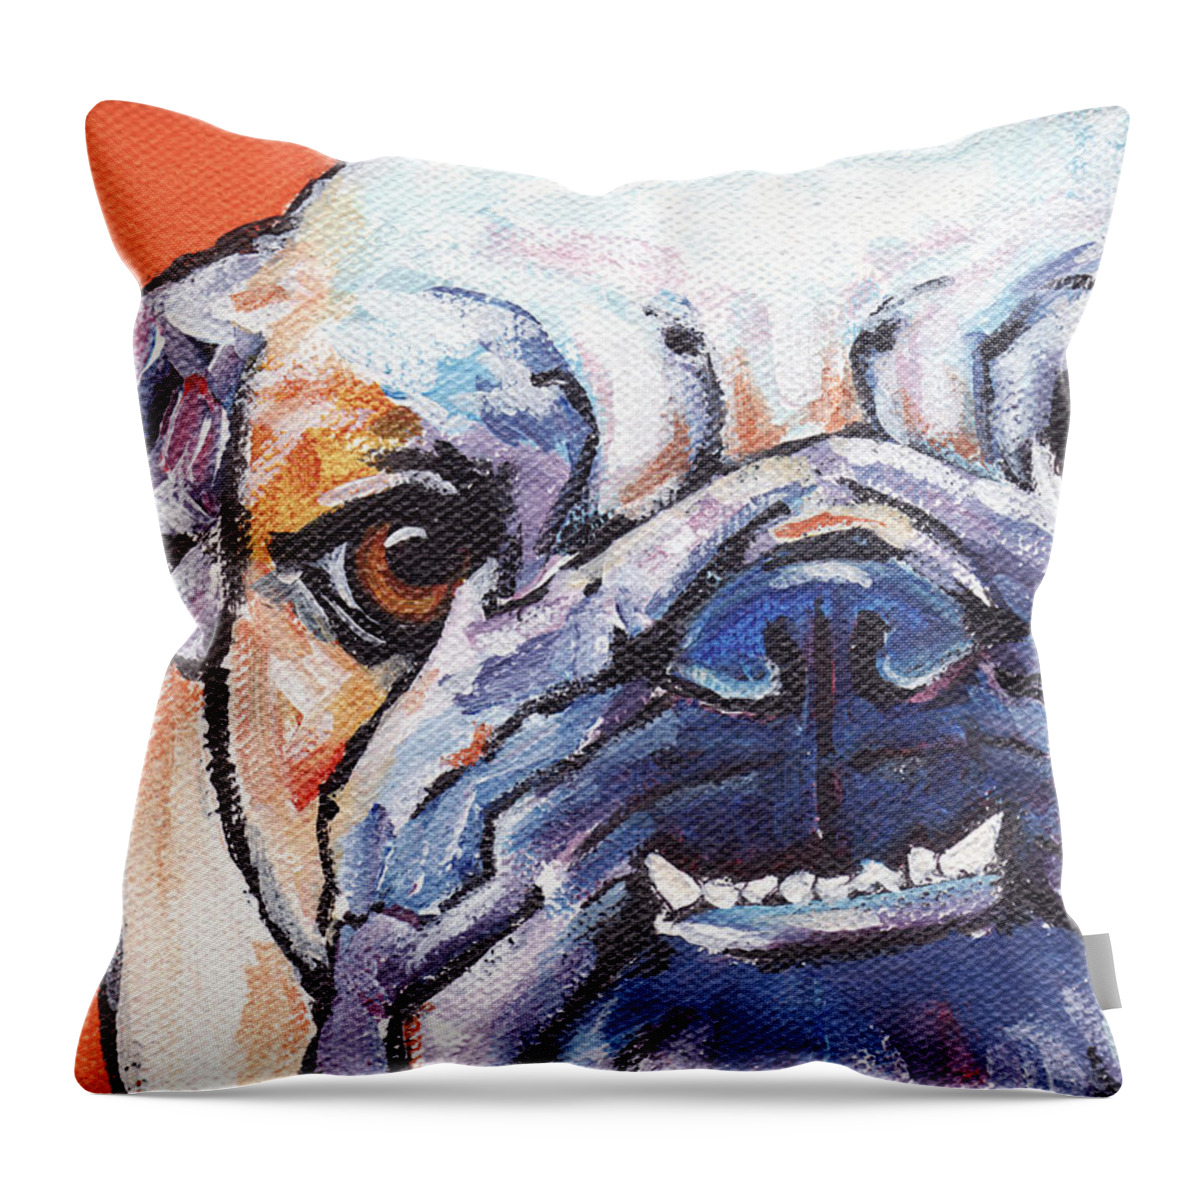 Bulldog Throw Pillow featuring the painting Bulldog by Greg and Linda Halom